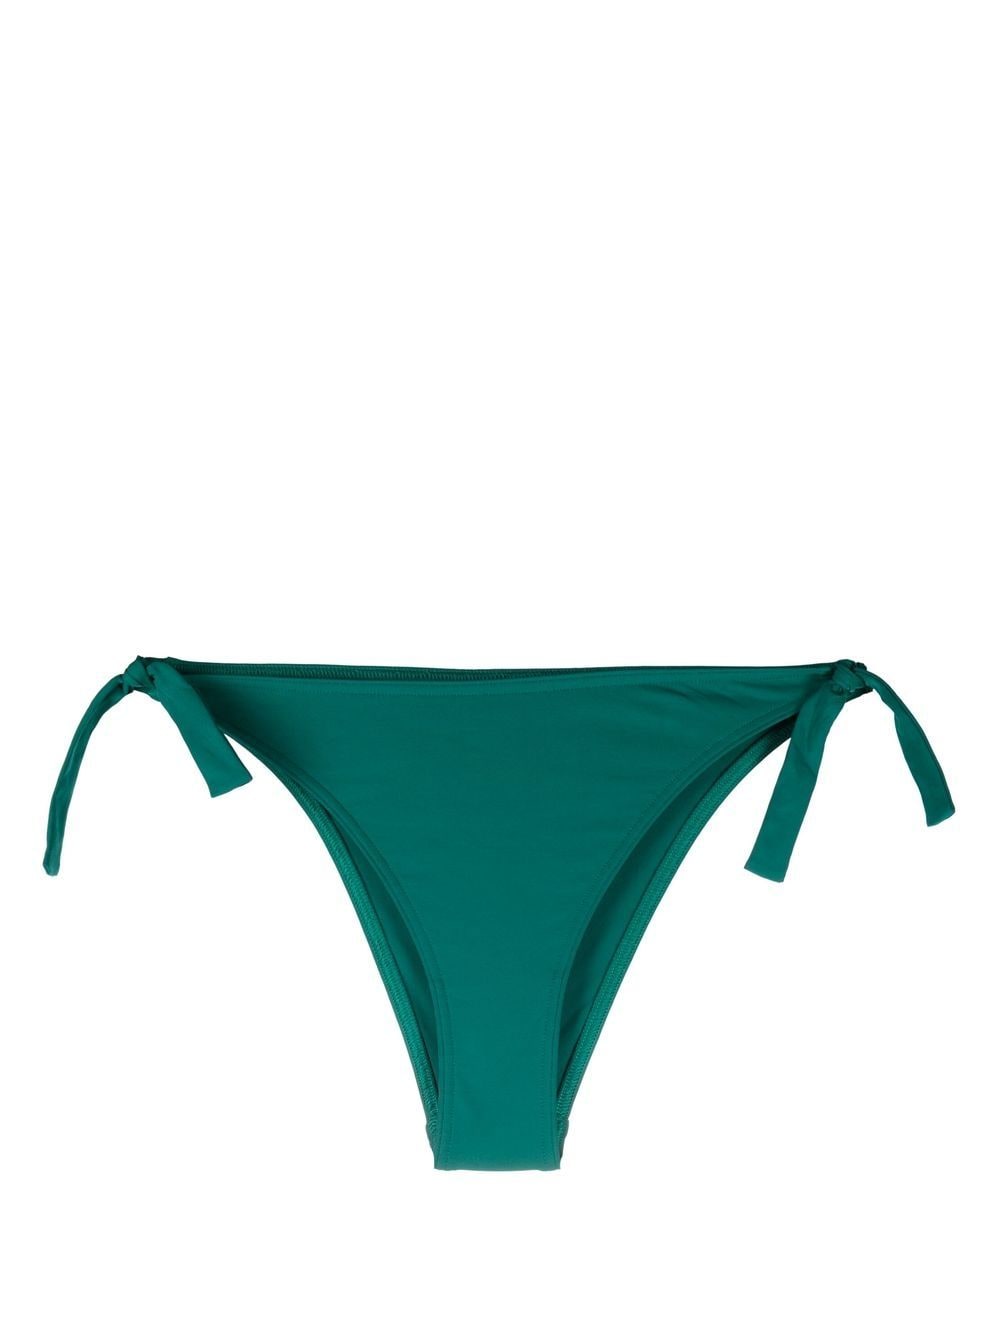 ERES Panache thin bikini bottoms - Green von ERES